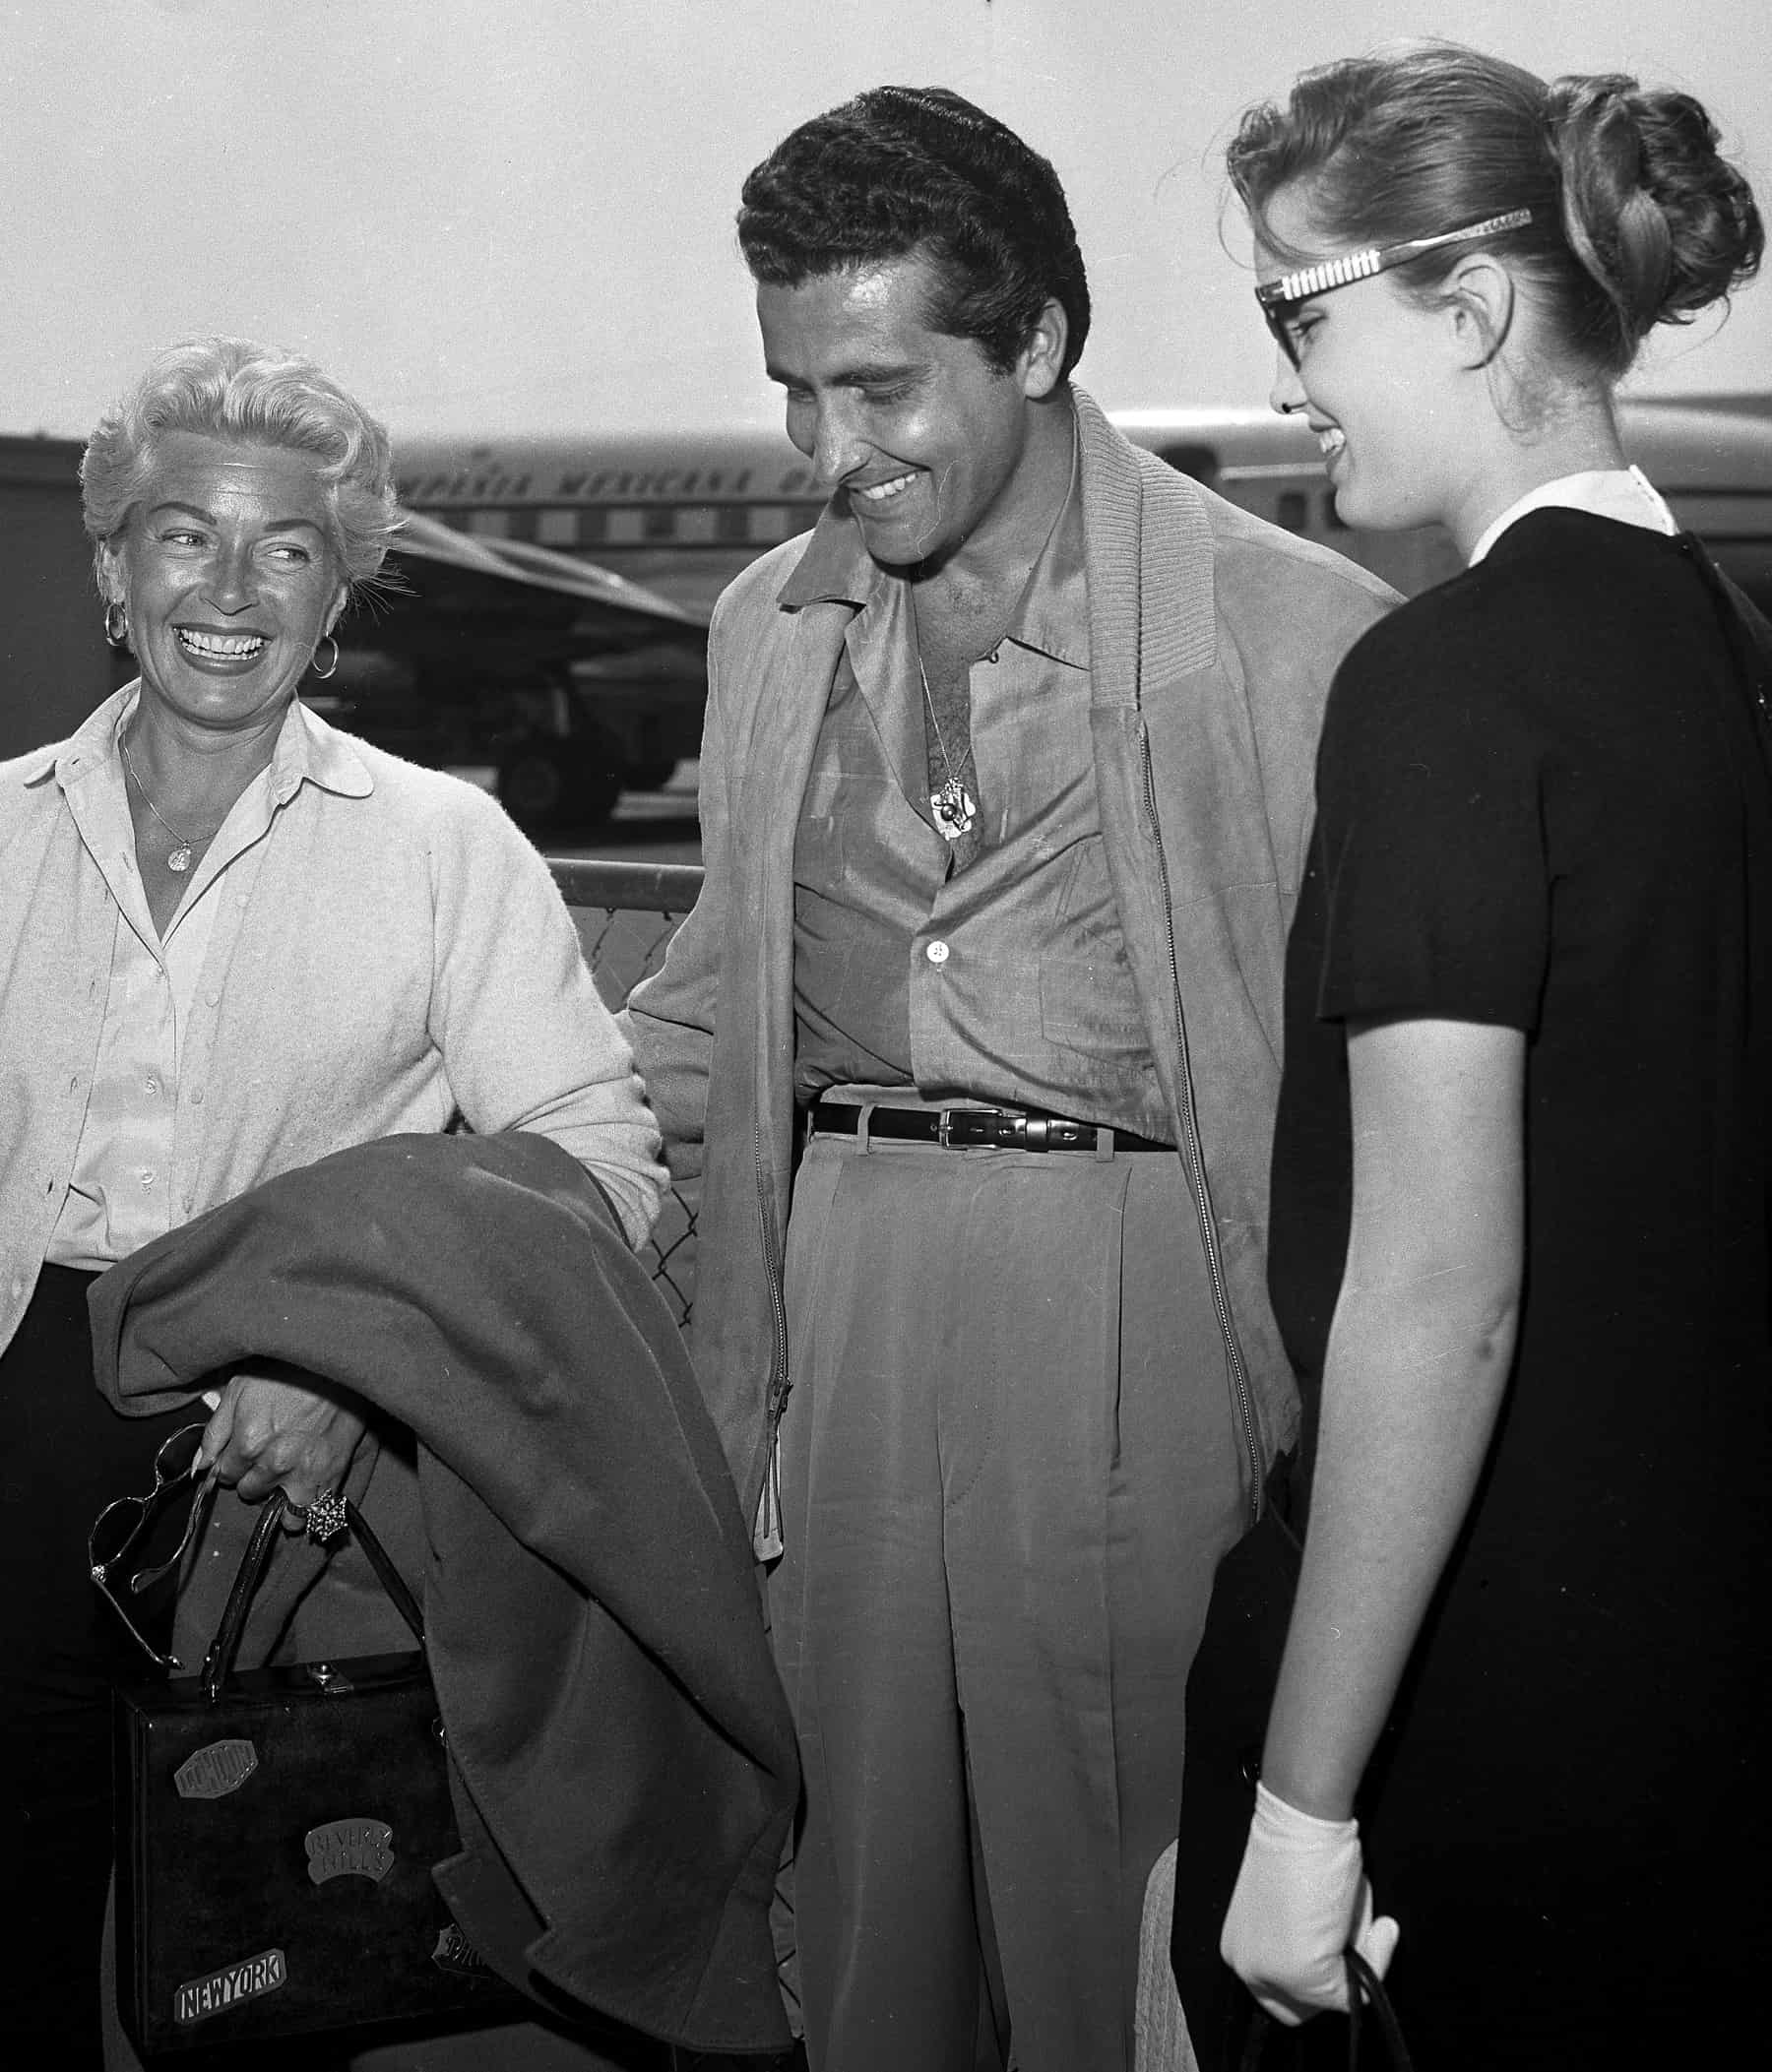 Lana Turner, Johnny Stomponato and Cheryl Crane